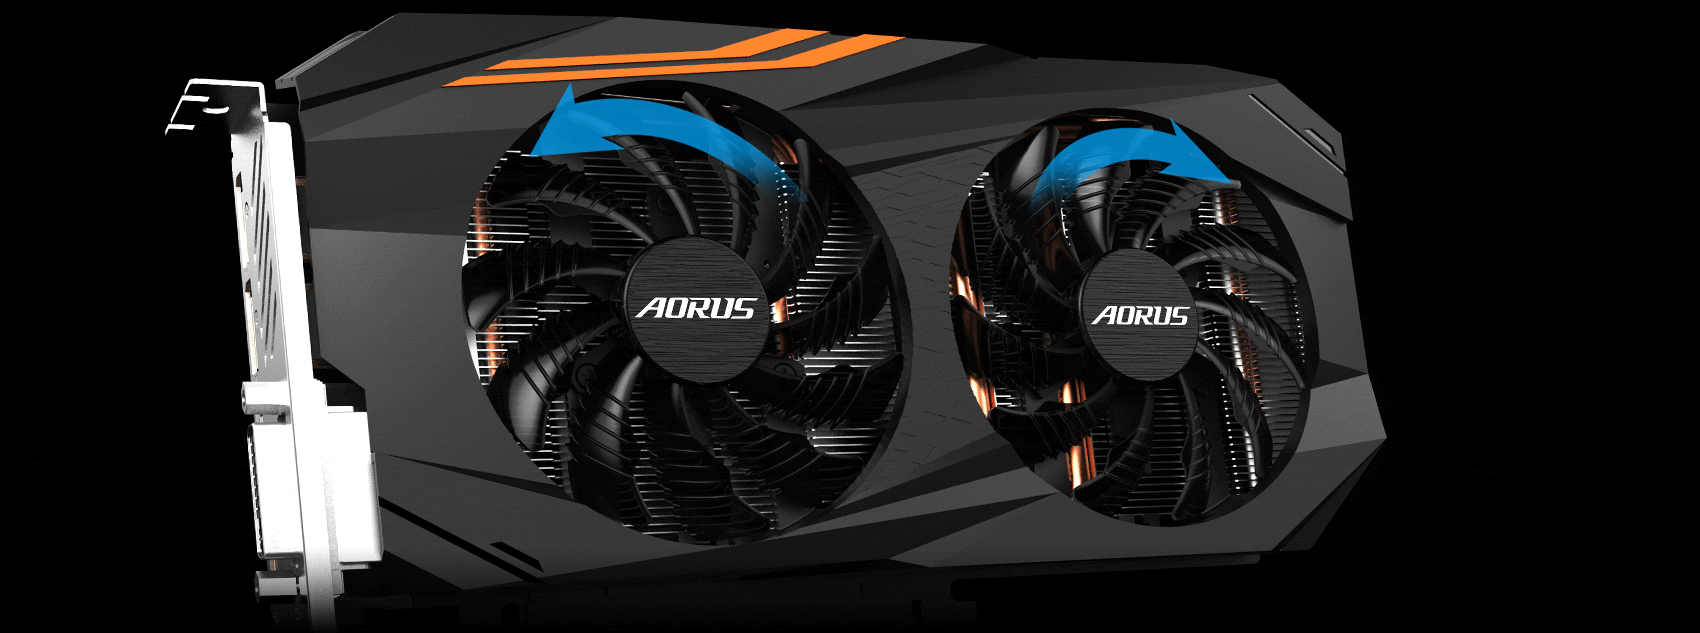 AORUS Radeon™ RX580 4G (rev. 1.0/1.1 